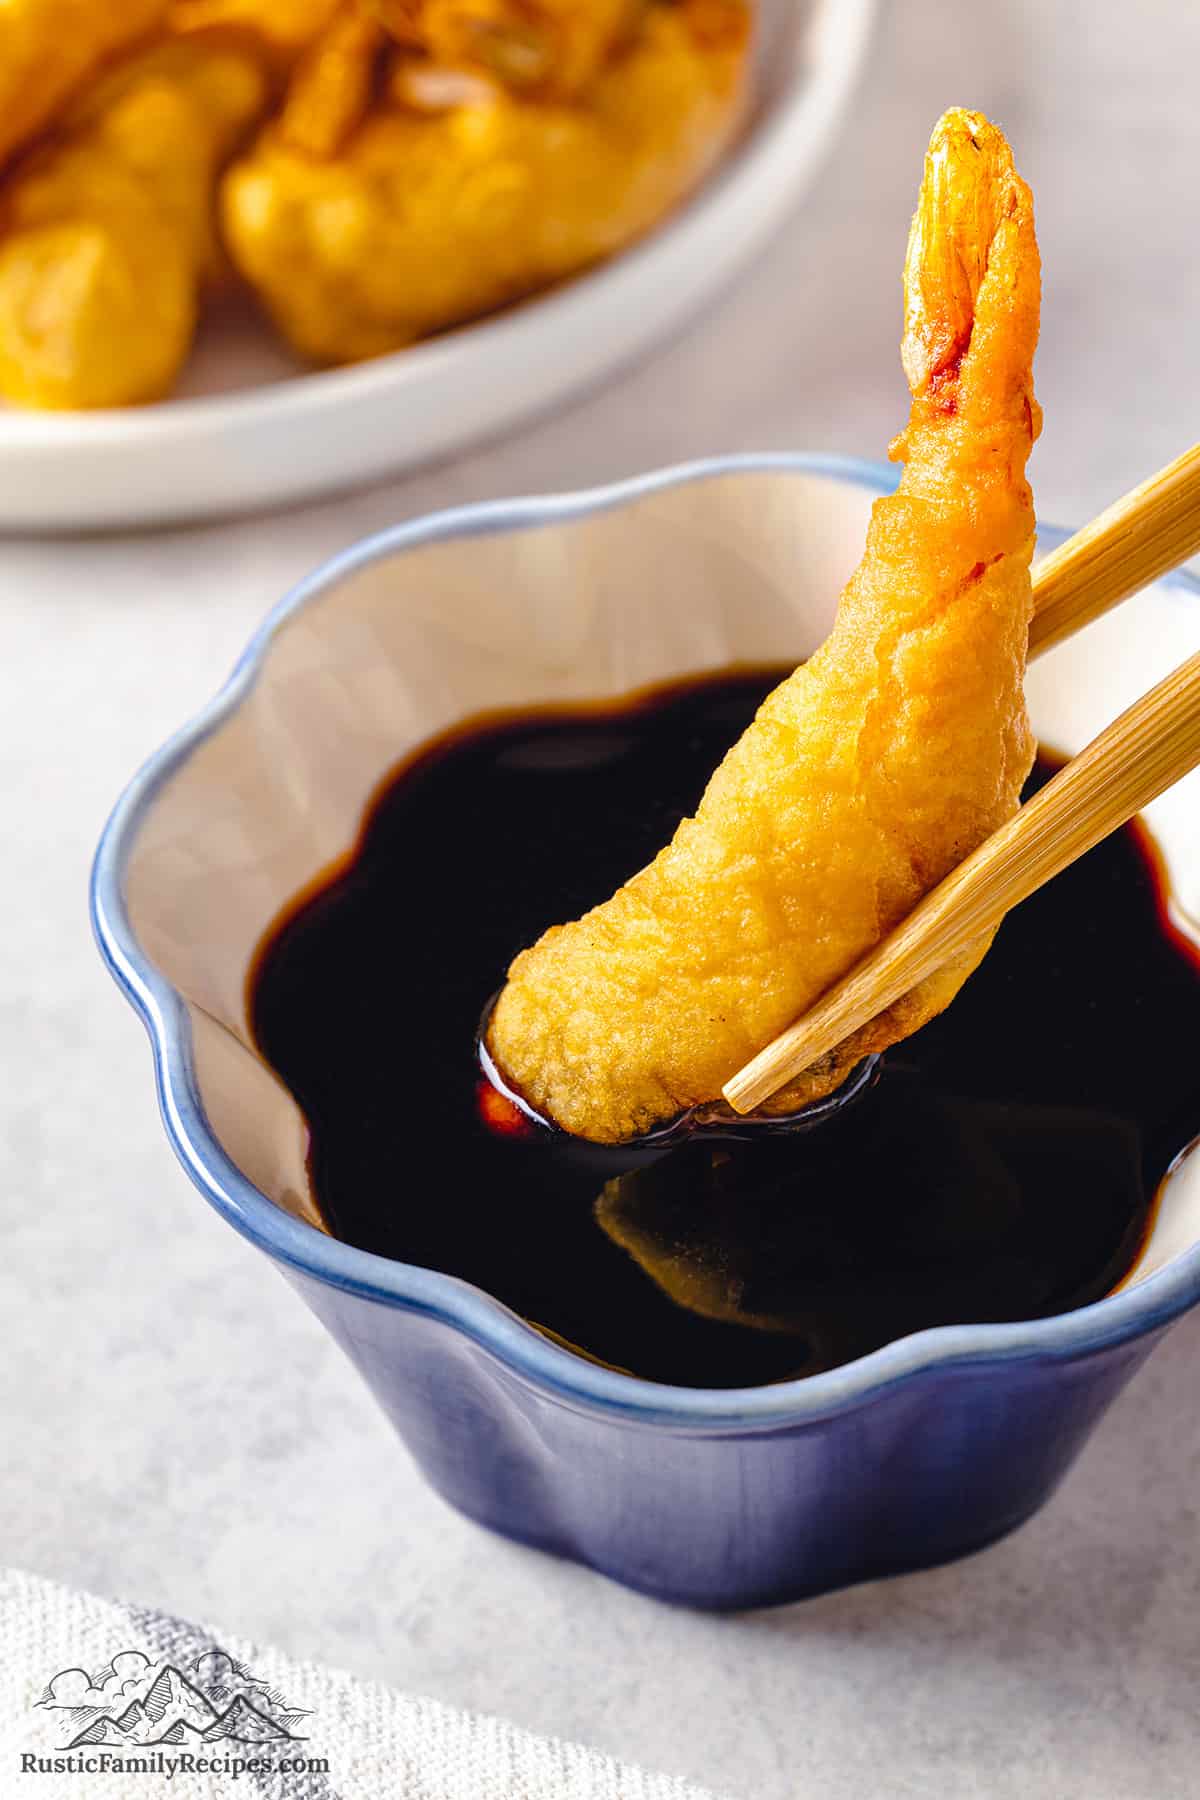 Dipping shrimp tempura in sauce